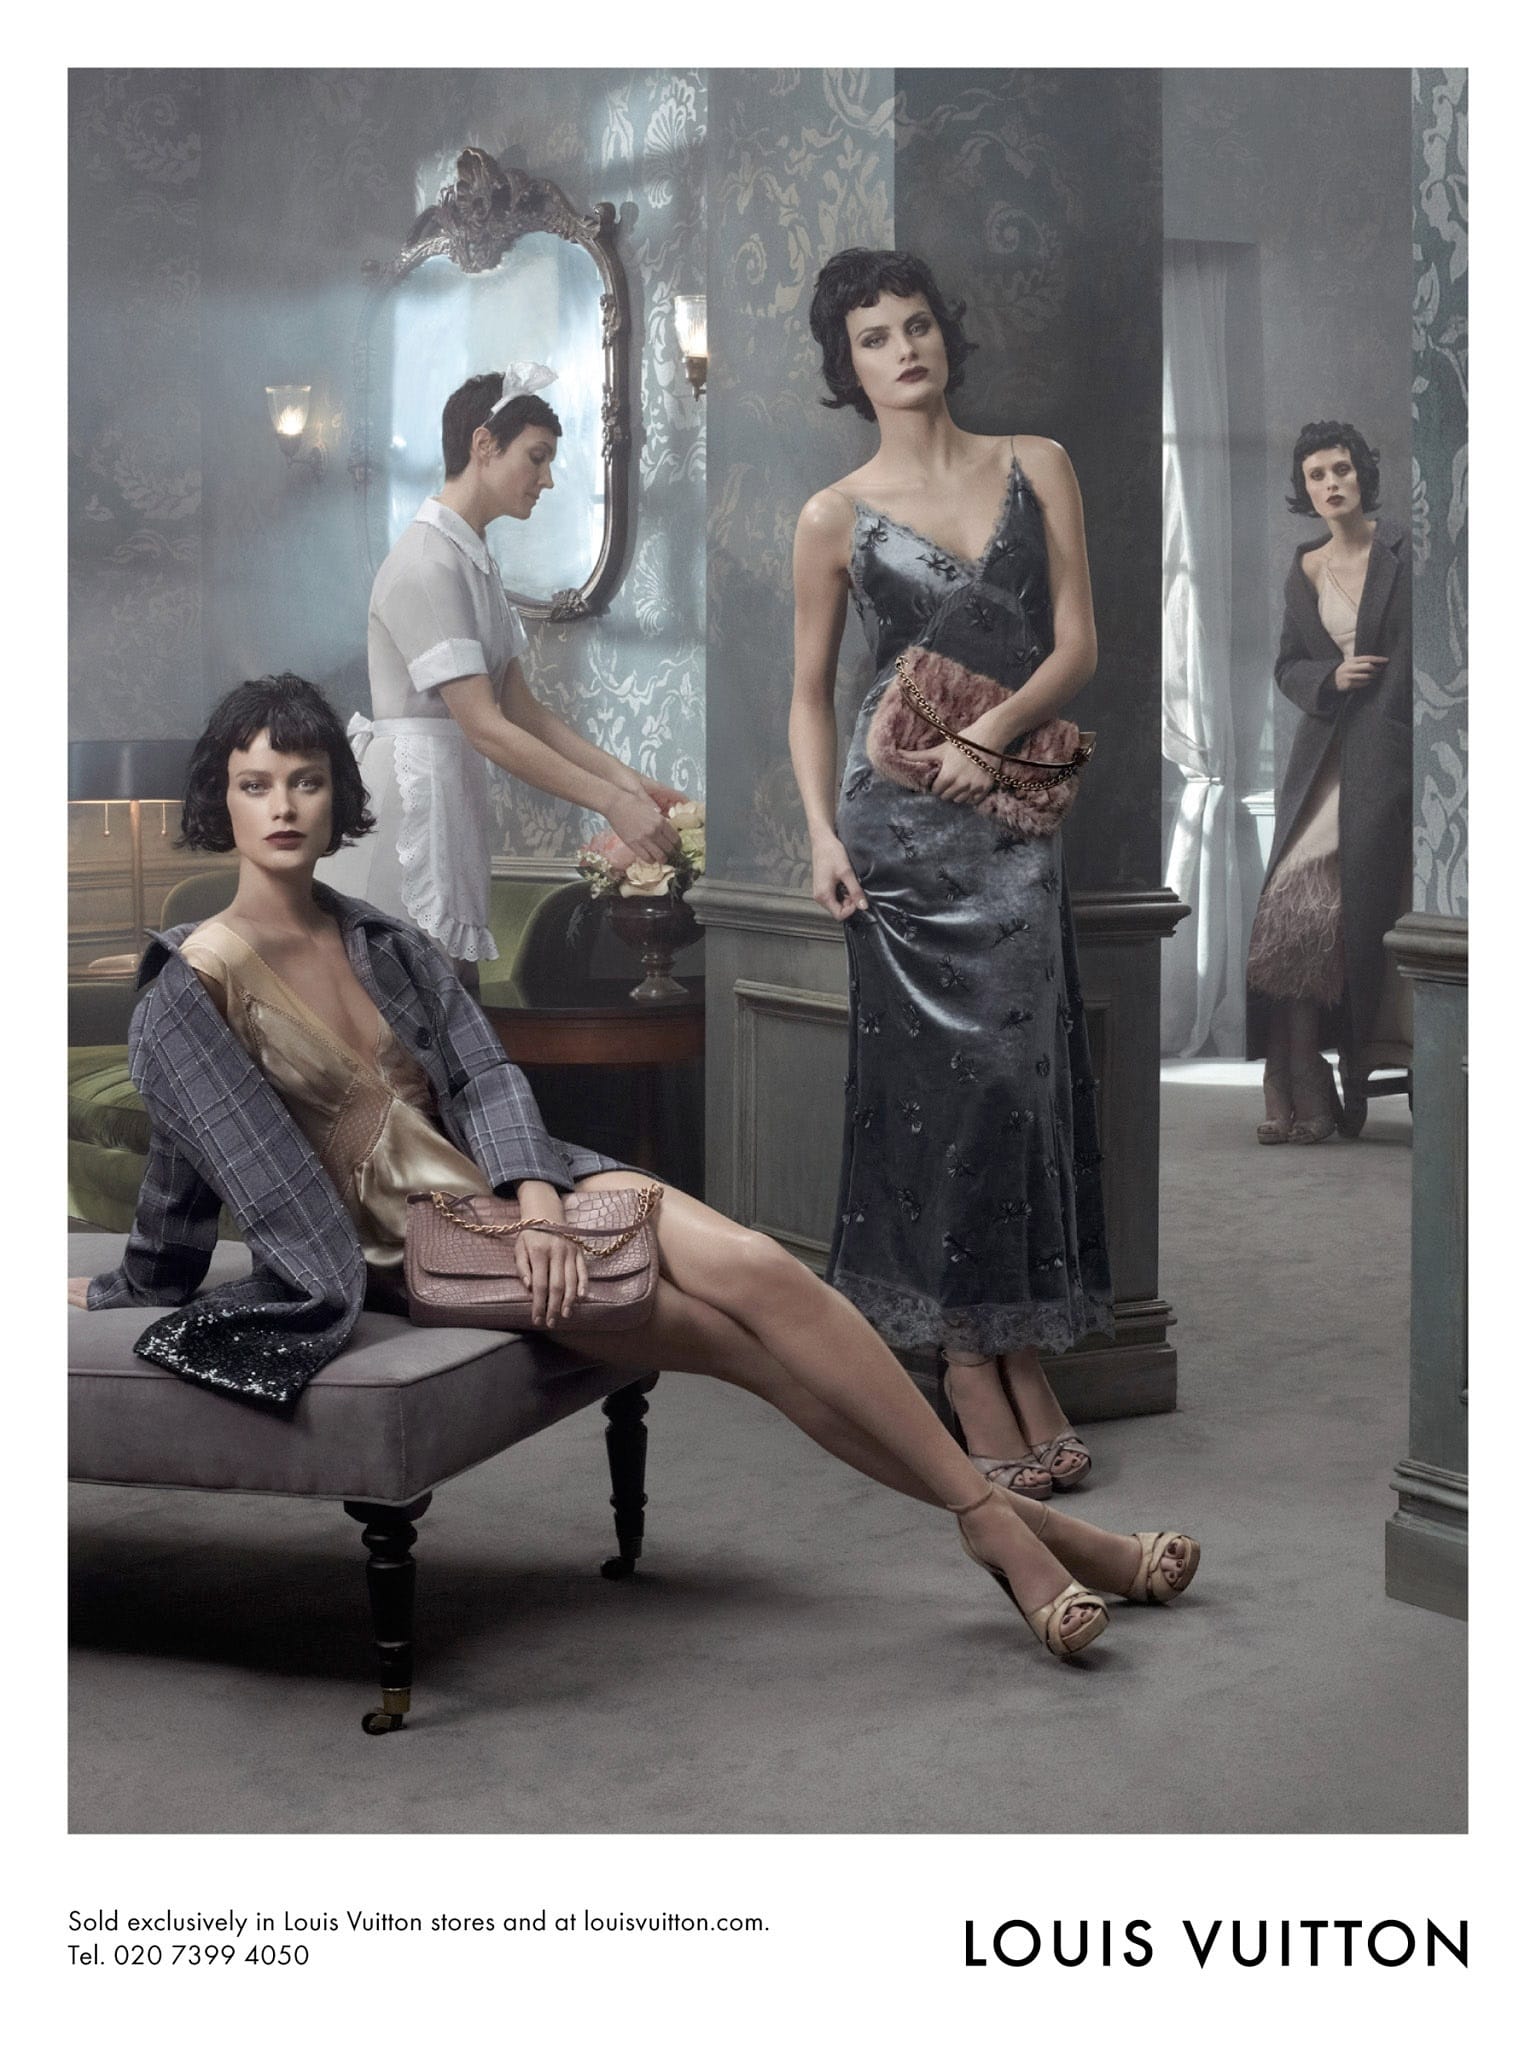 Pouty Purse Ads : Louis Vuitton Fall 2013 campaign